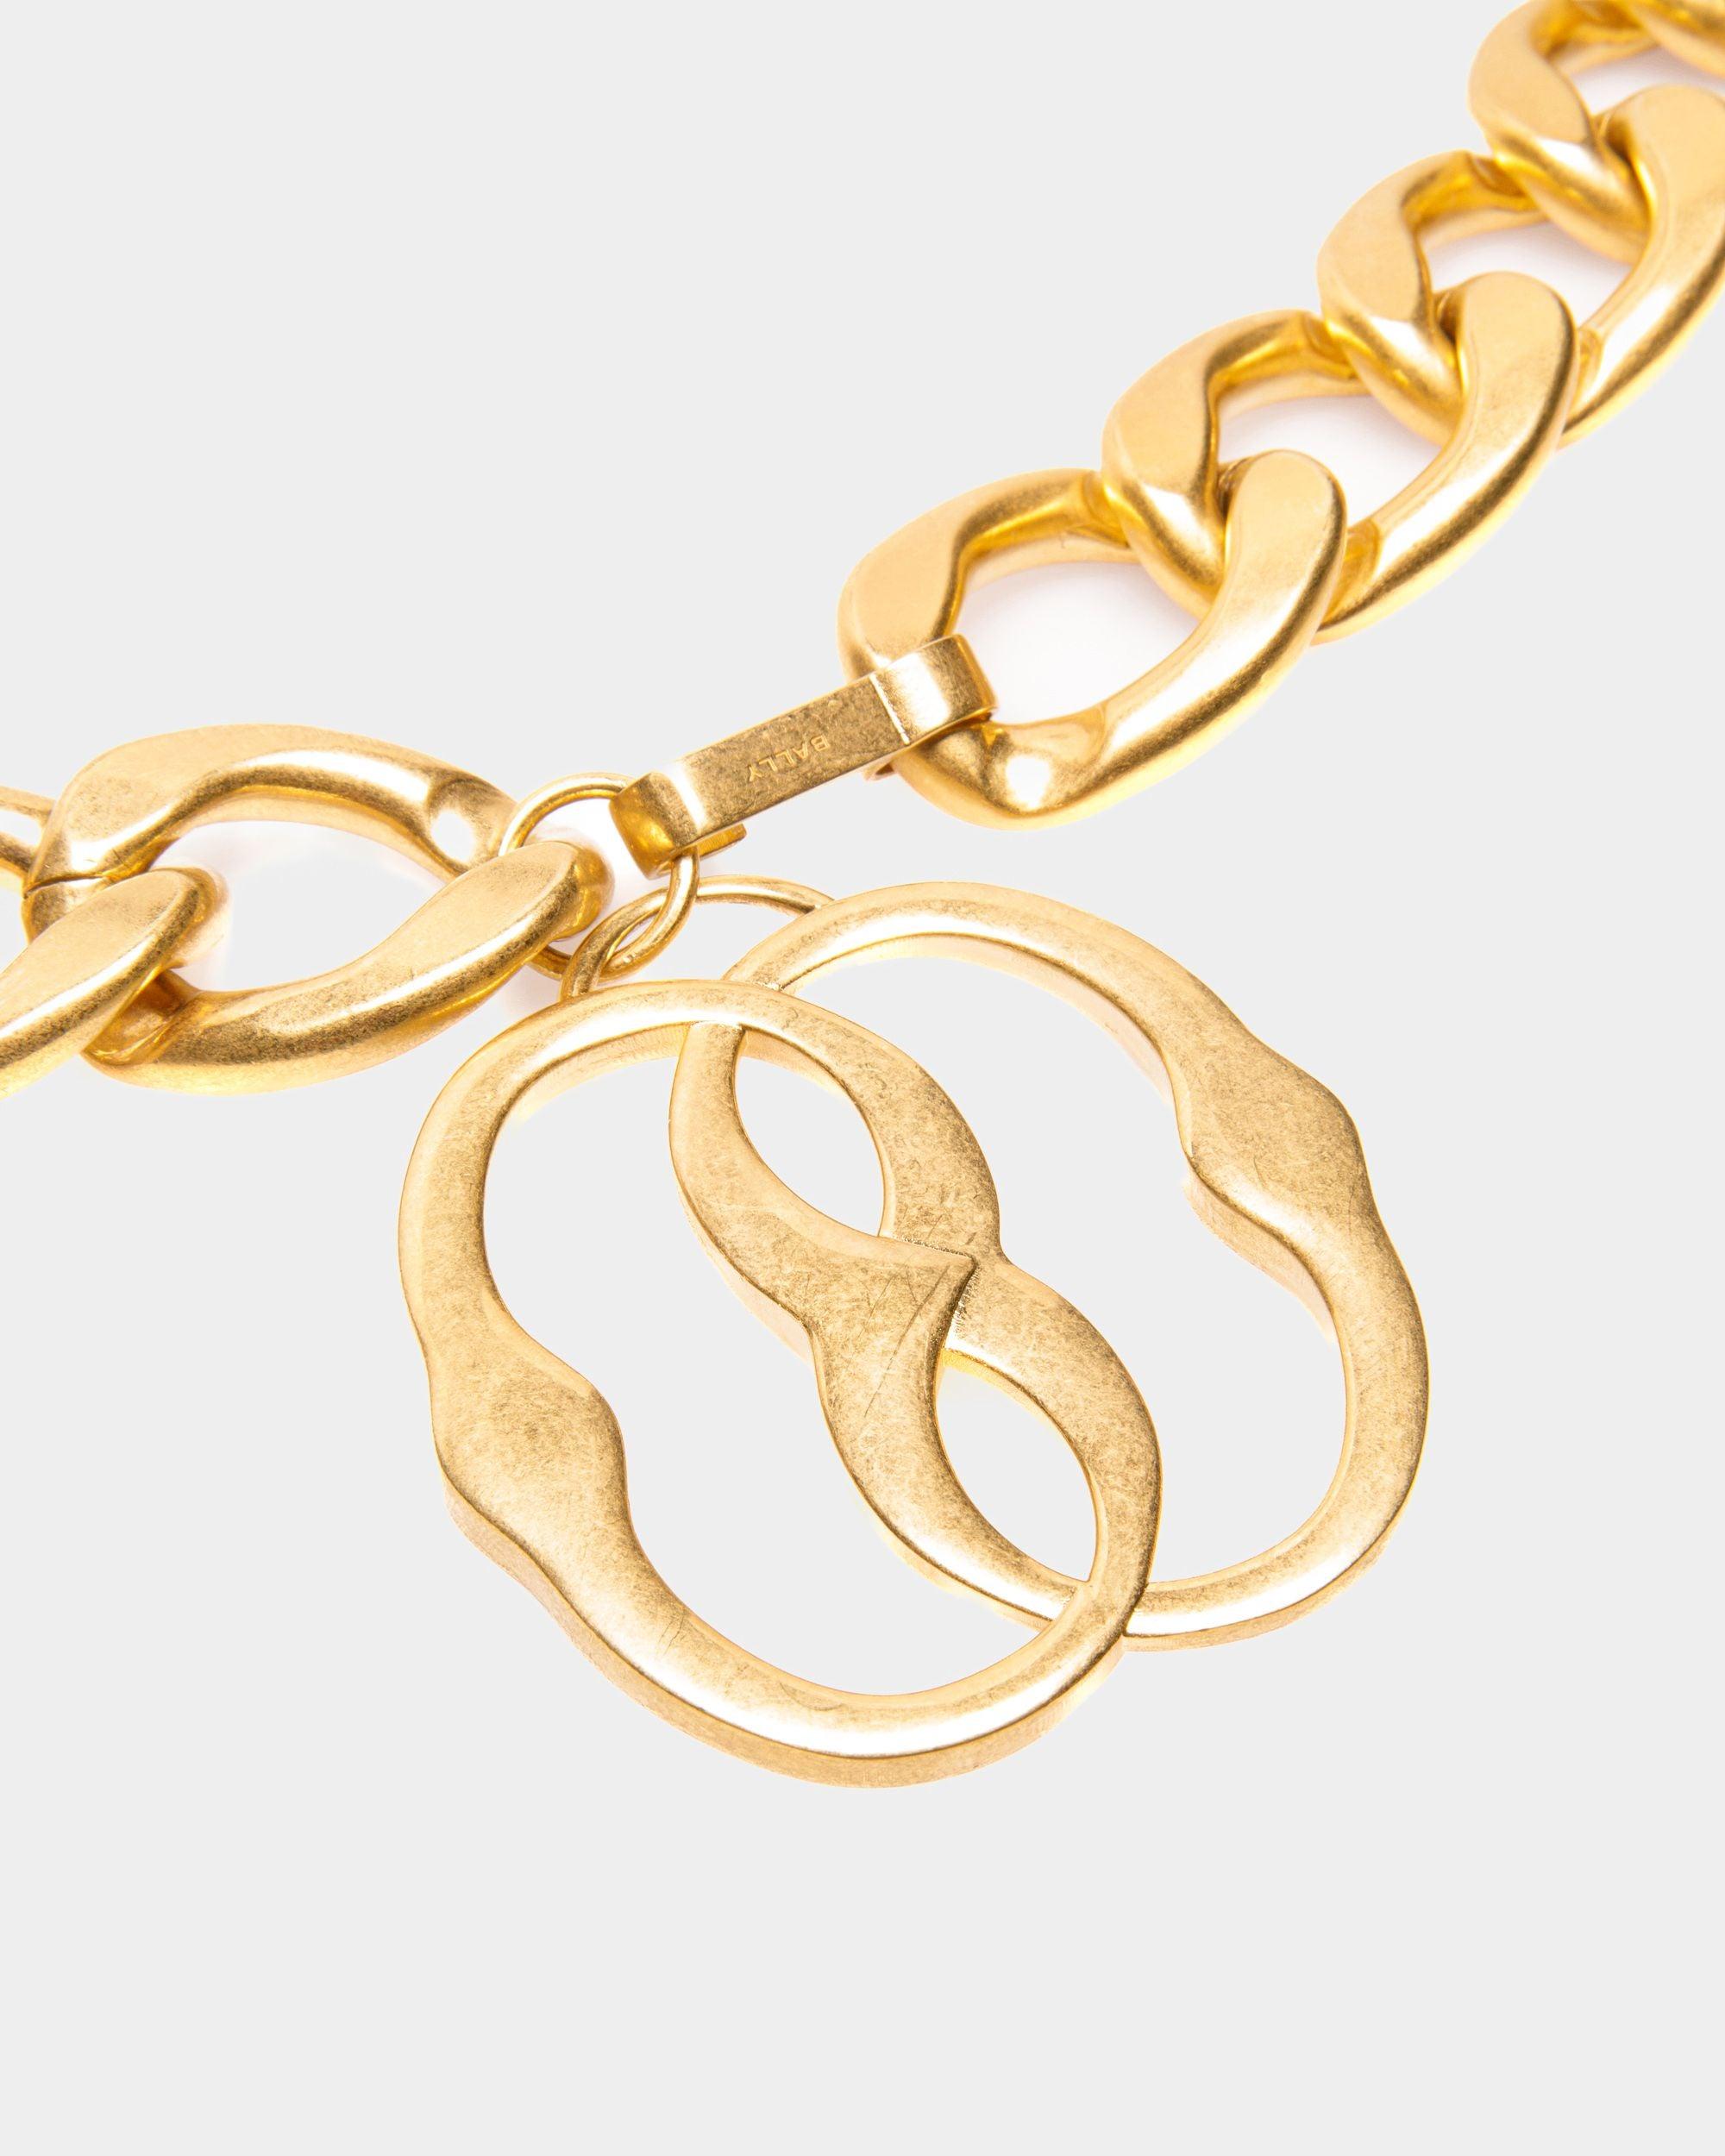 Bally Emblem Chain Belt In Gold Brass in Metallic